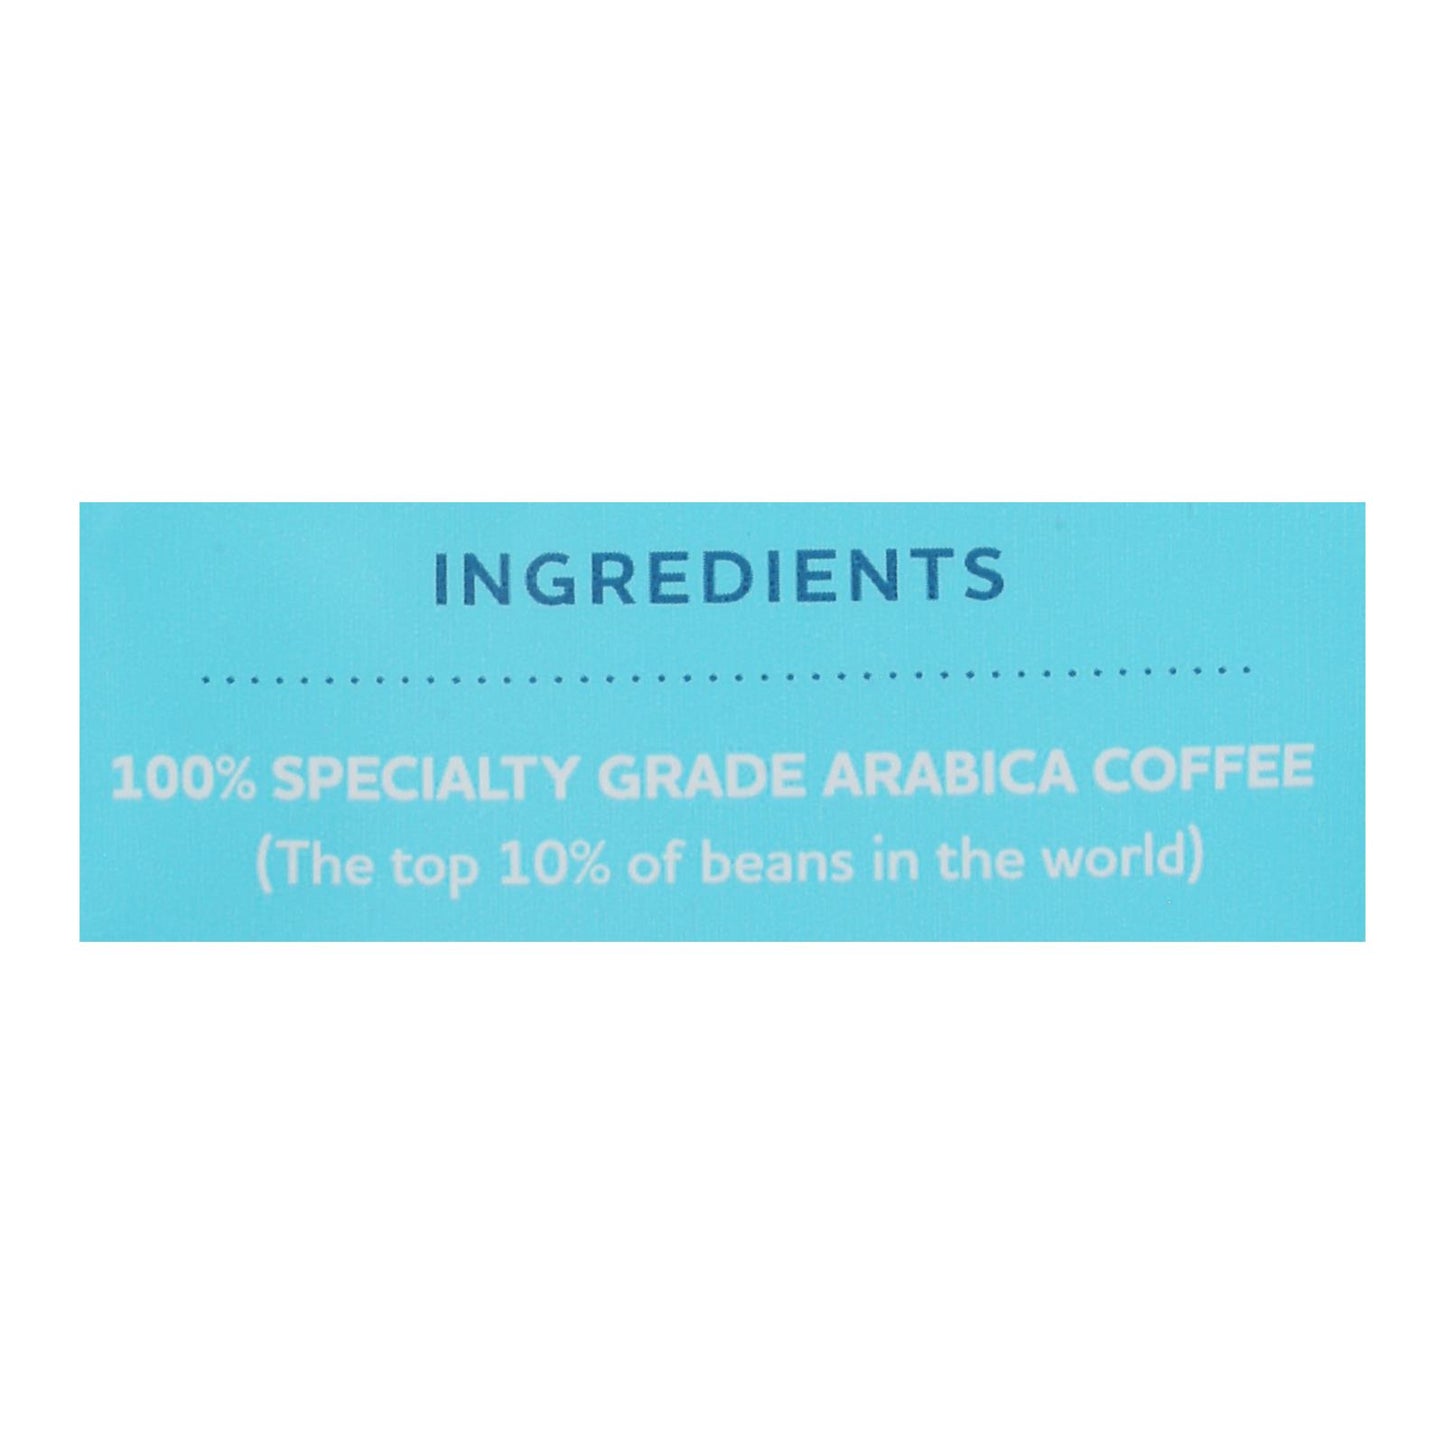 Cameron's Specialty Coffee Premium Jamaica Blue Mountain Blend Ground Coffee Beans  - Case Of 6 - 10 Oz